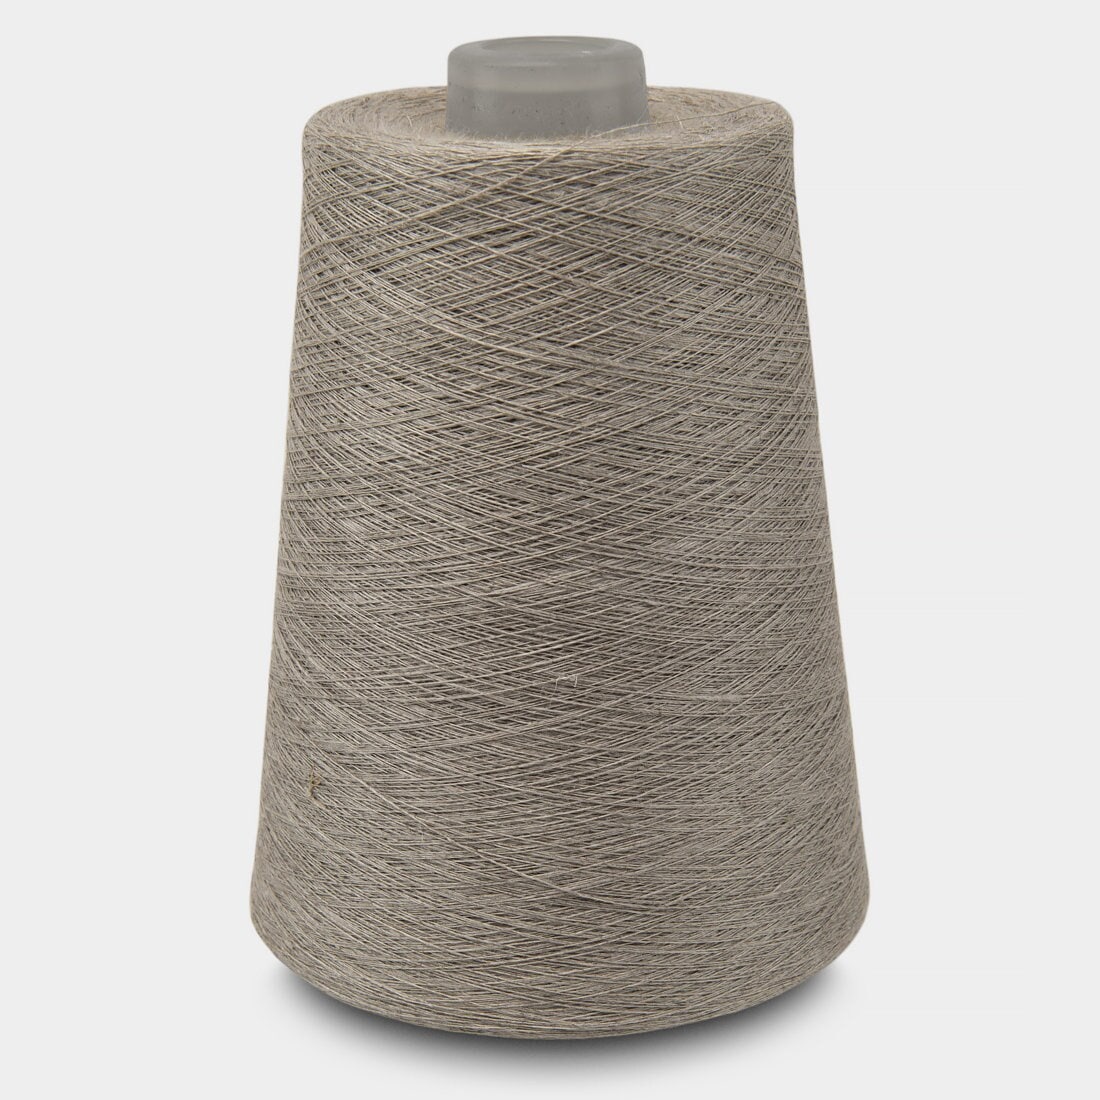 3 Mm Macrame Cord 3kg / 520 M, Soft Twisted Cotton Rope, Macrame